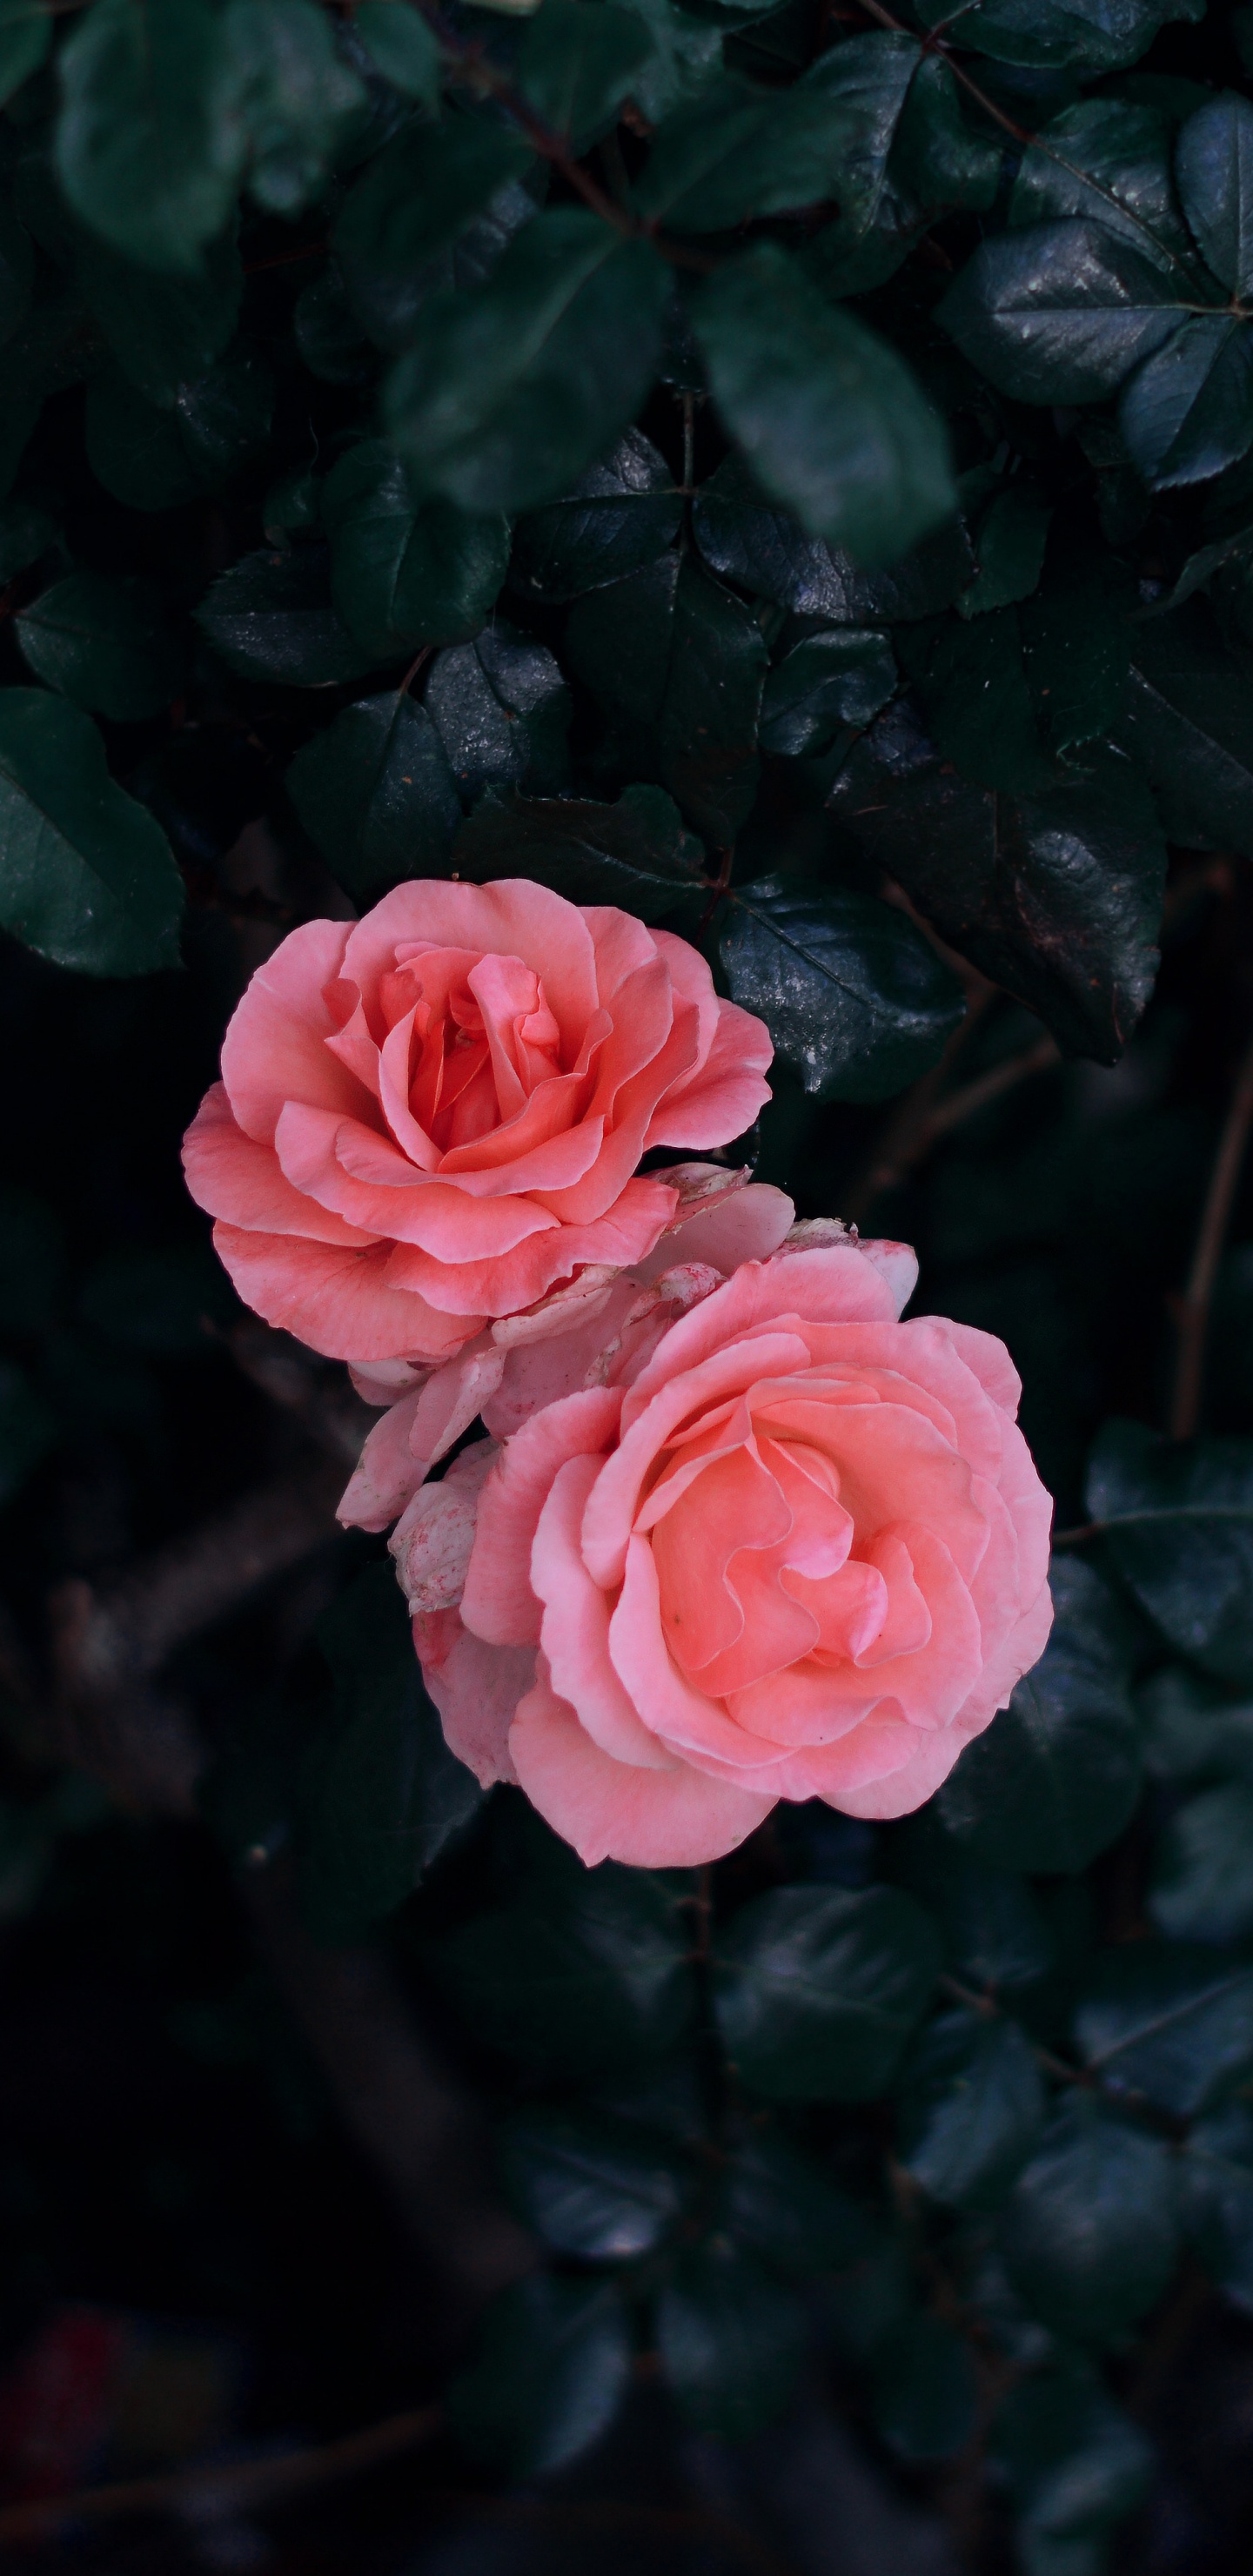 Rose Rose en Fleurs Pendant la Journée. Wallpaper in 1440x2960 Resolution